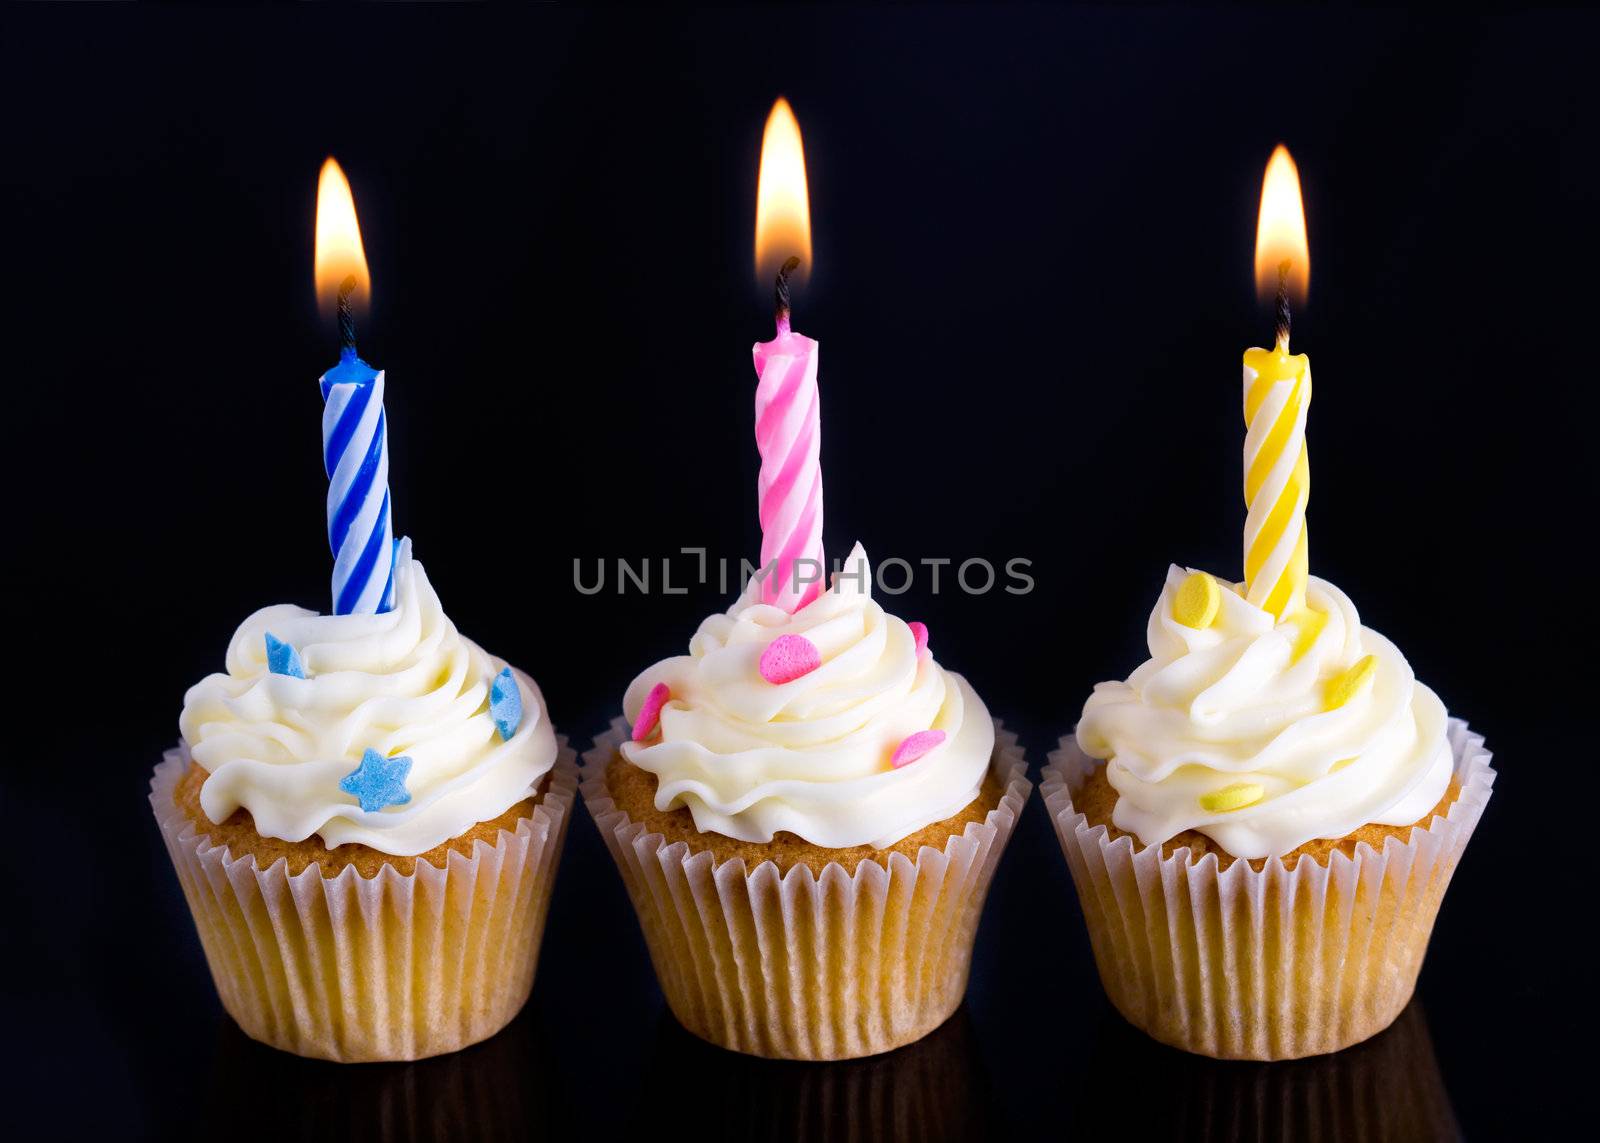 Trio of birthday cupcakes against black